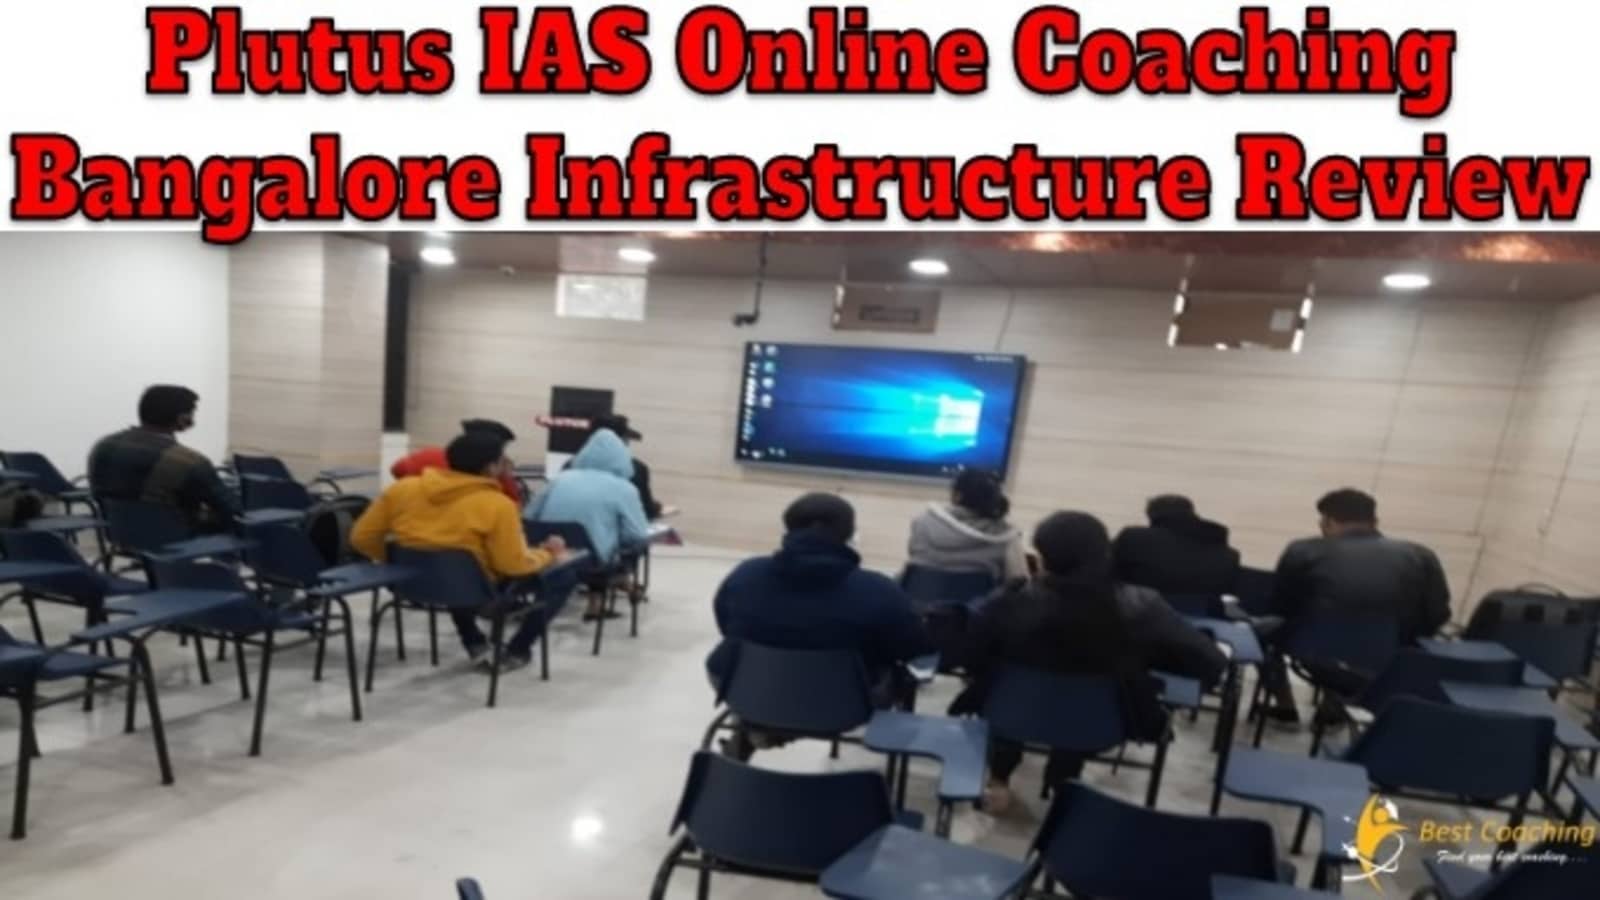 Plutus IAS Online Coaching Bangalore Infrastructure Review